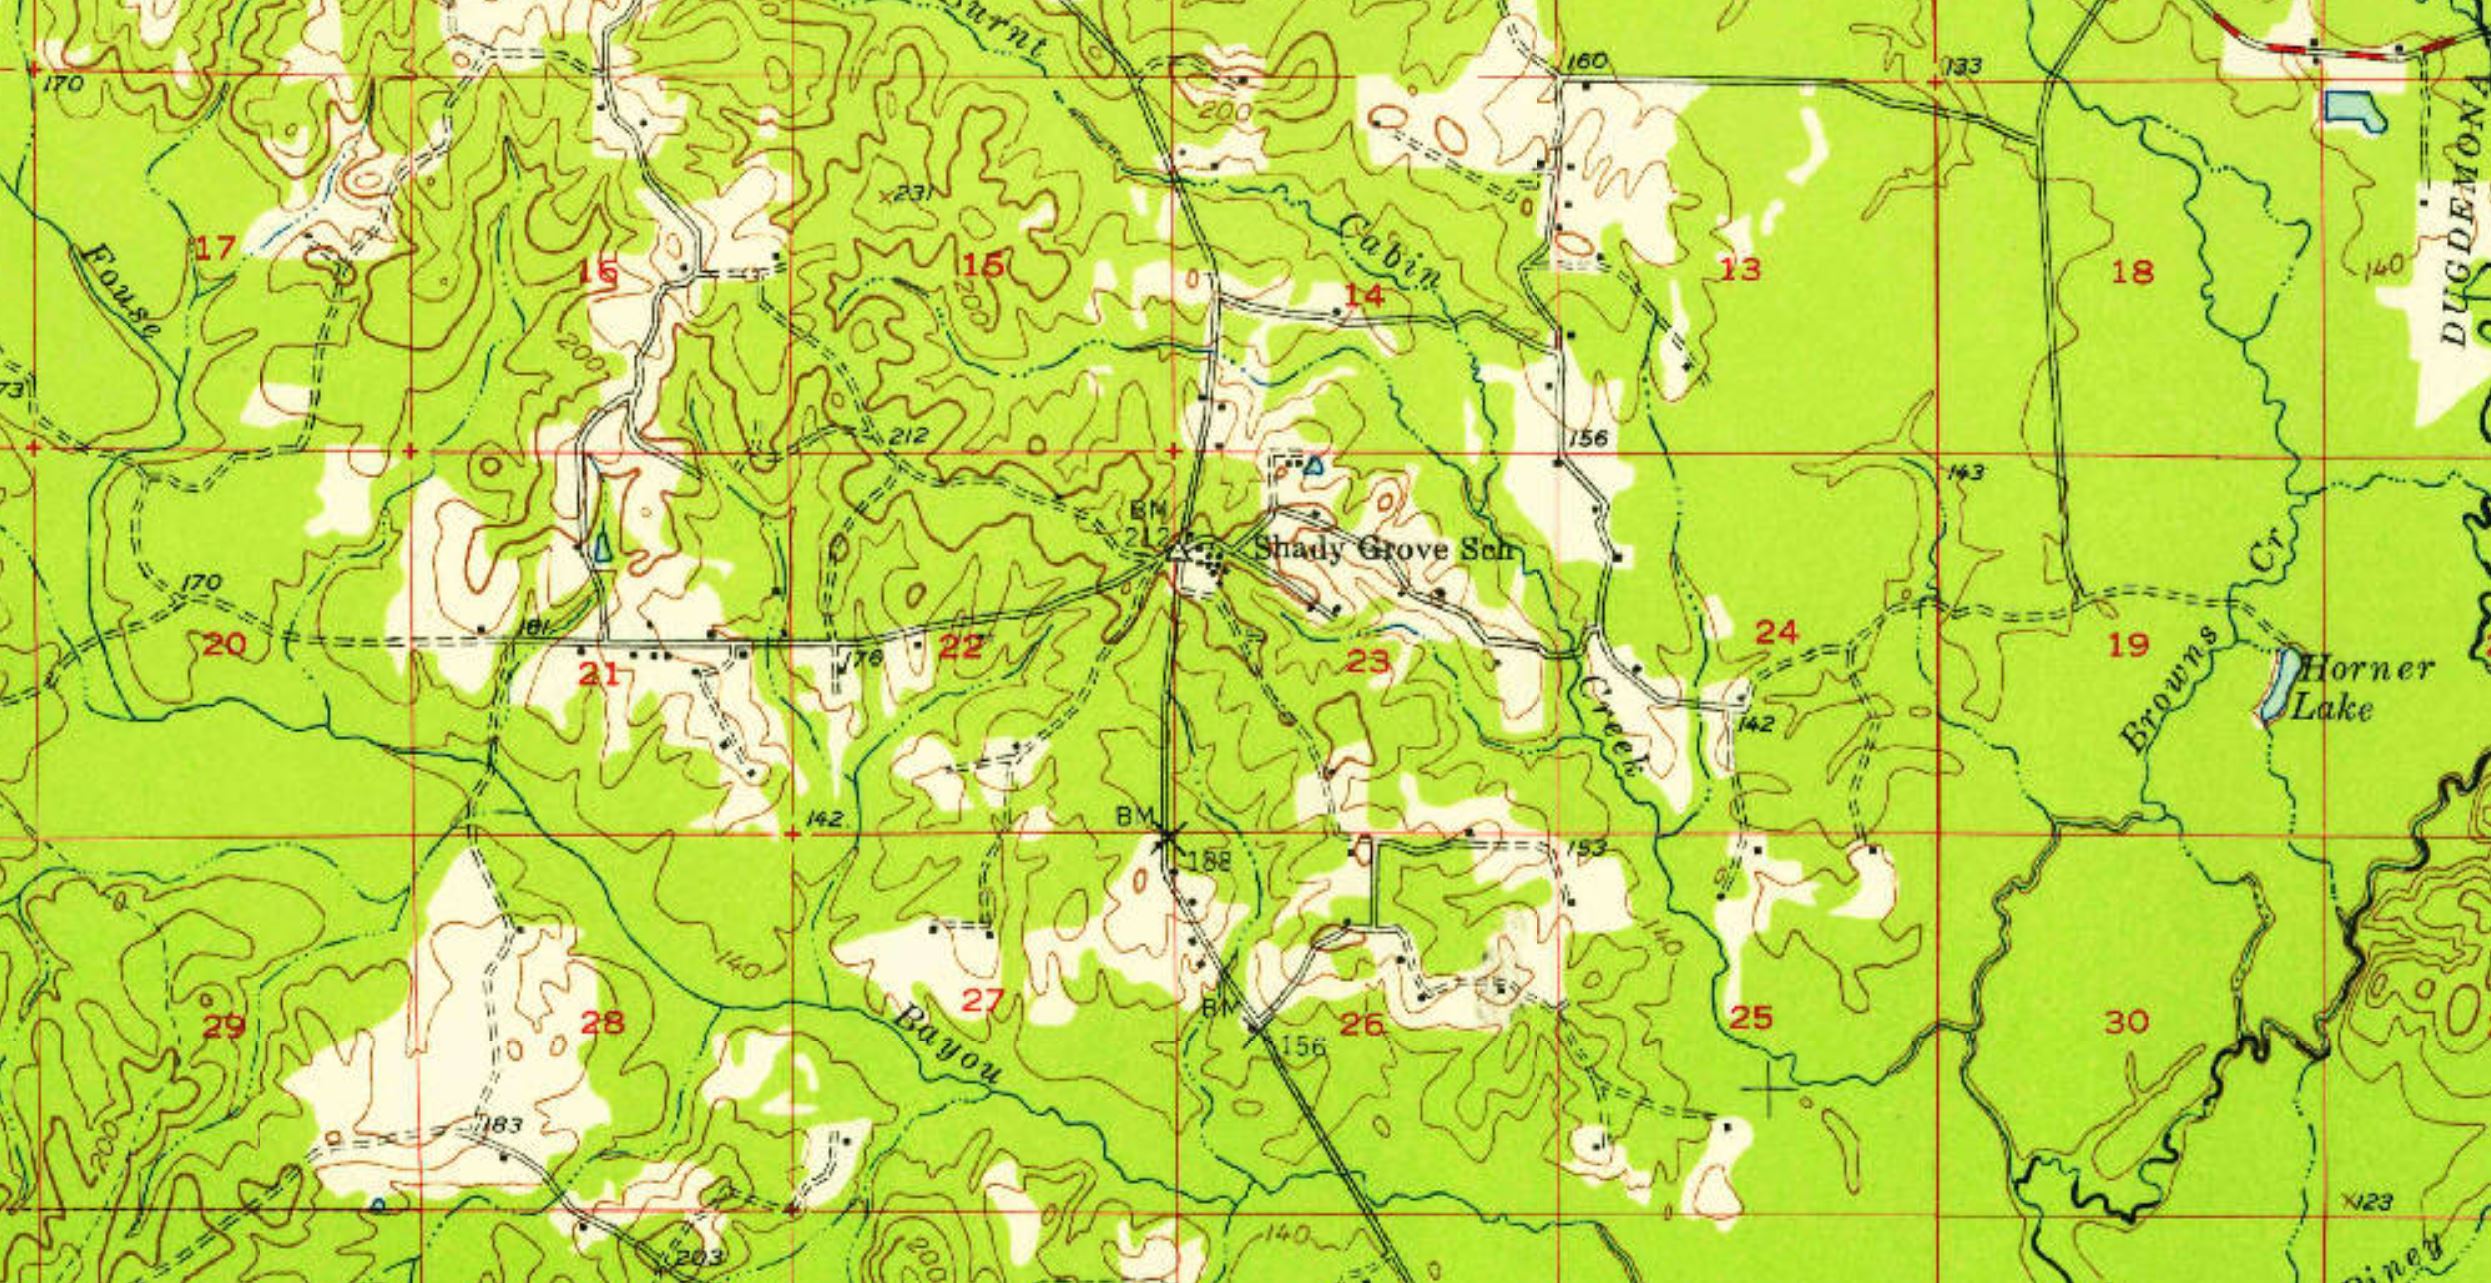 1431-bienshady-grove-high-schooltopo-map1957jpg-16506423898587.jpg